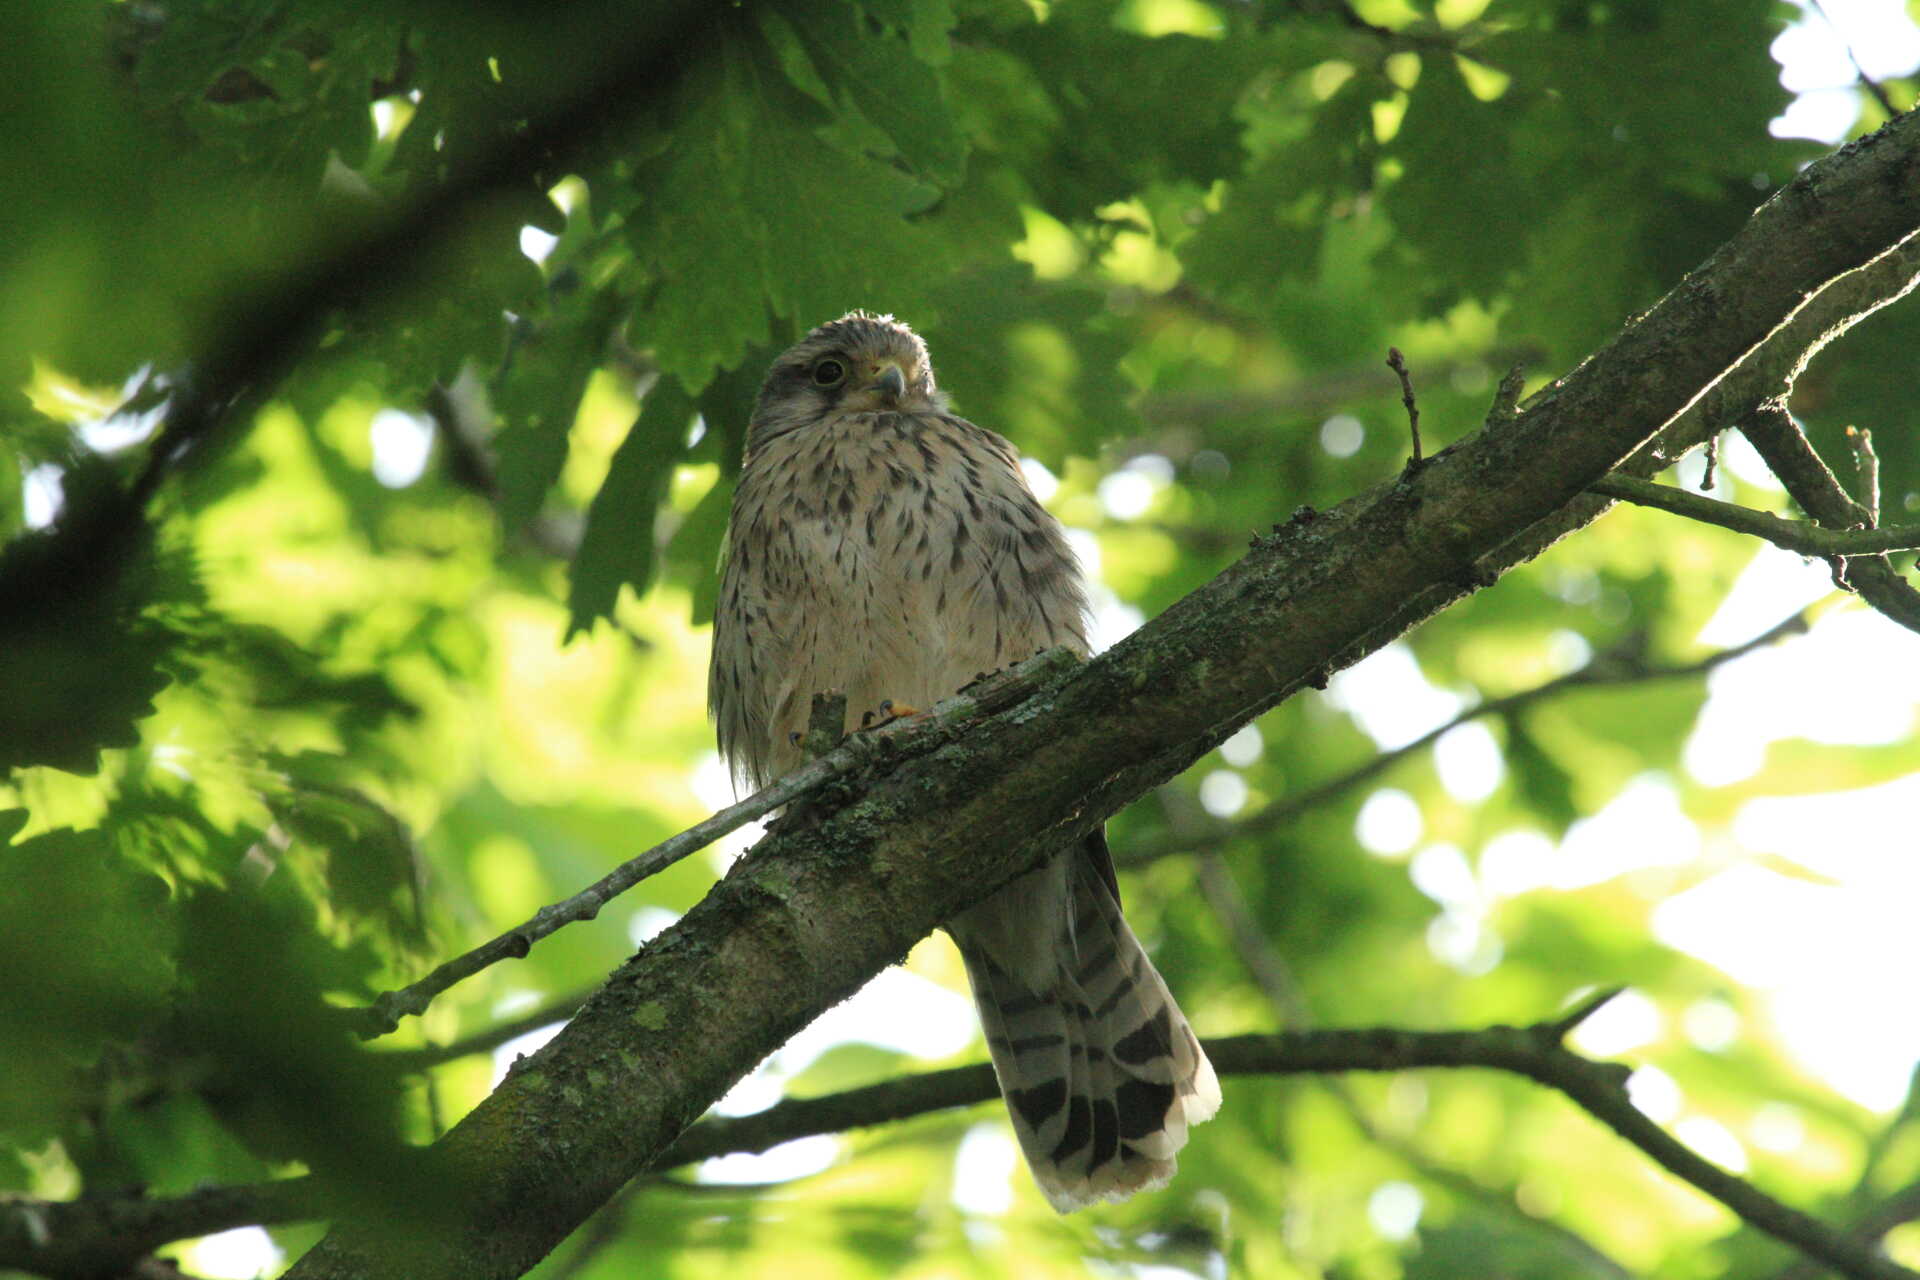 A fledgling Kestral in a tree